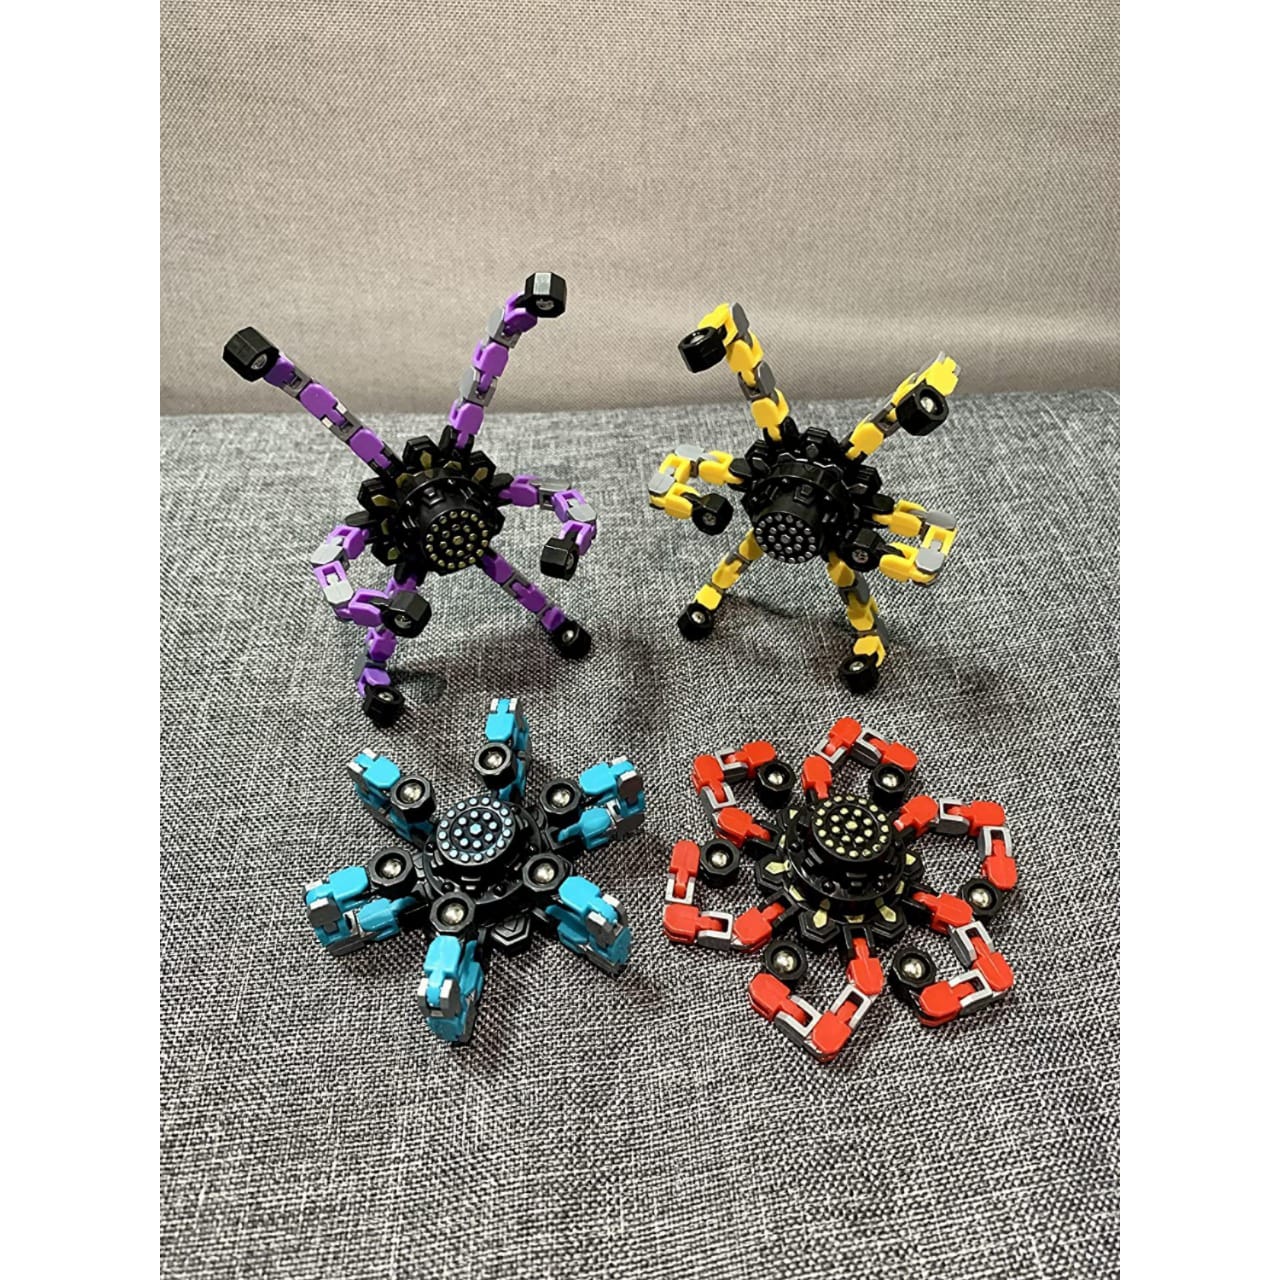 Transformable Fingertip Gyro Fidget Spinners Toys For Boys and Girls